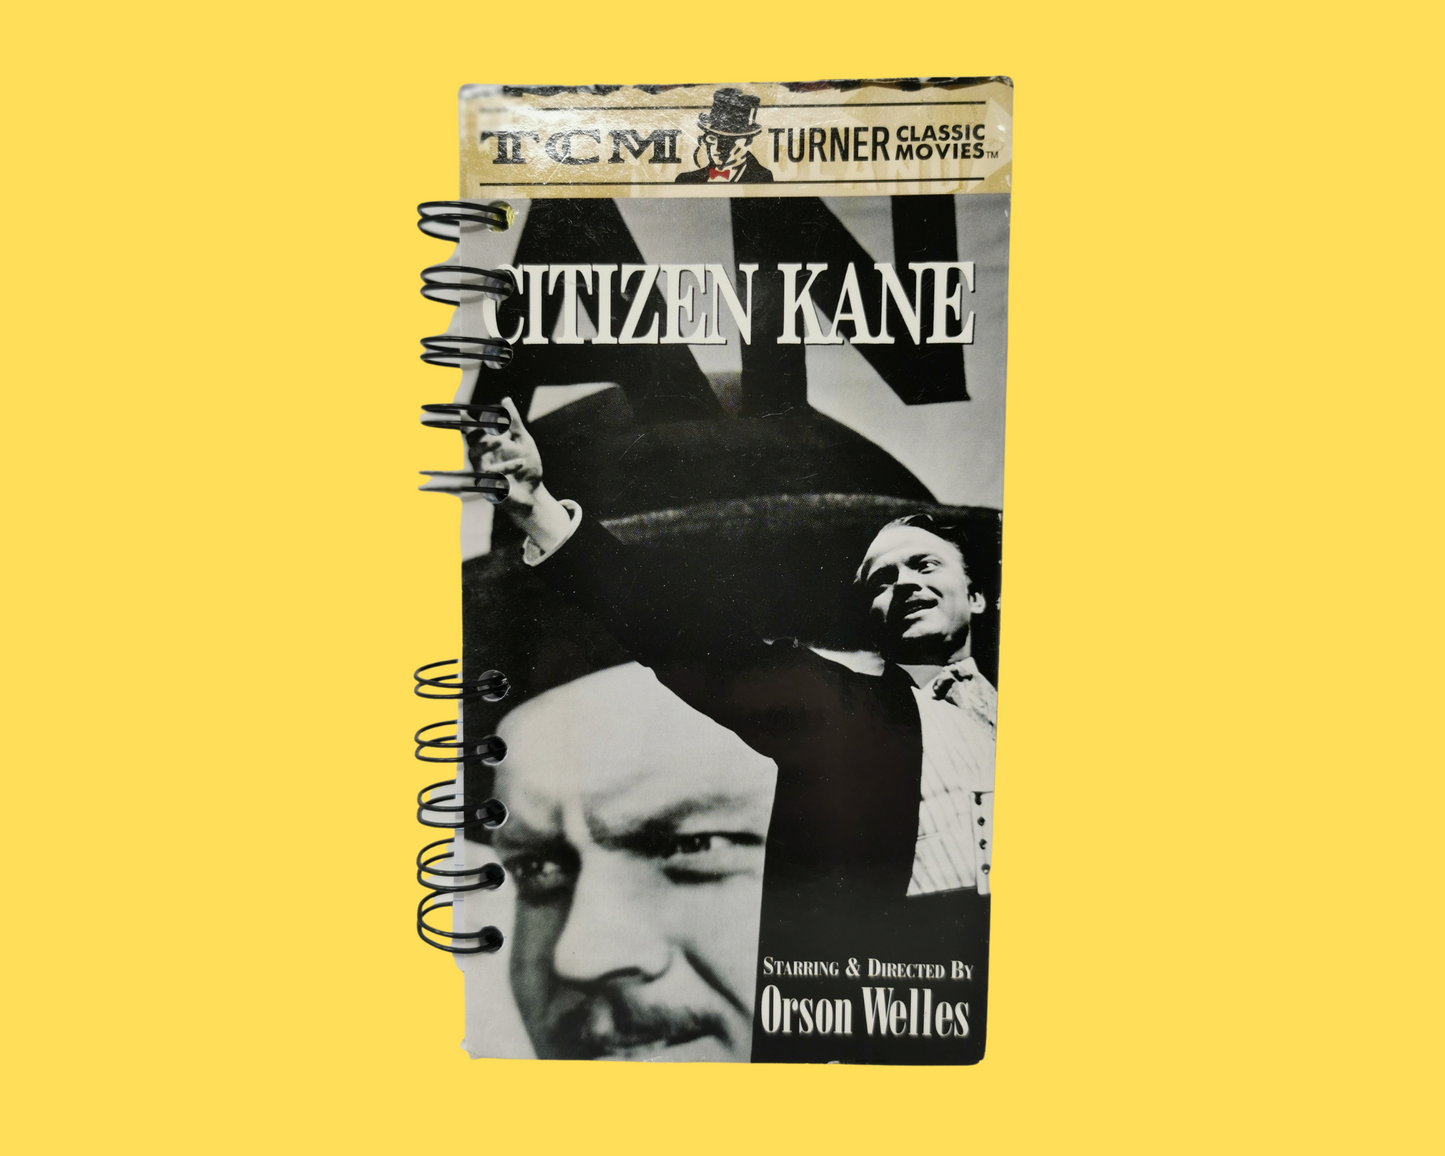 Citizen Kane VHS Movie Notebook